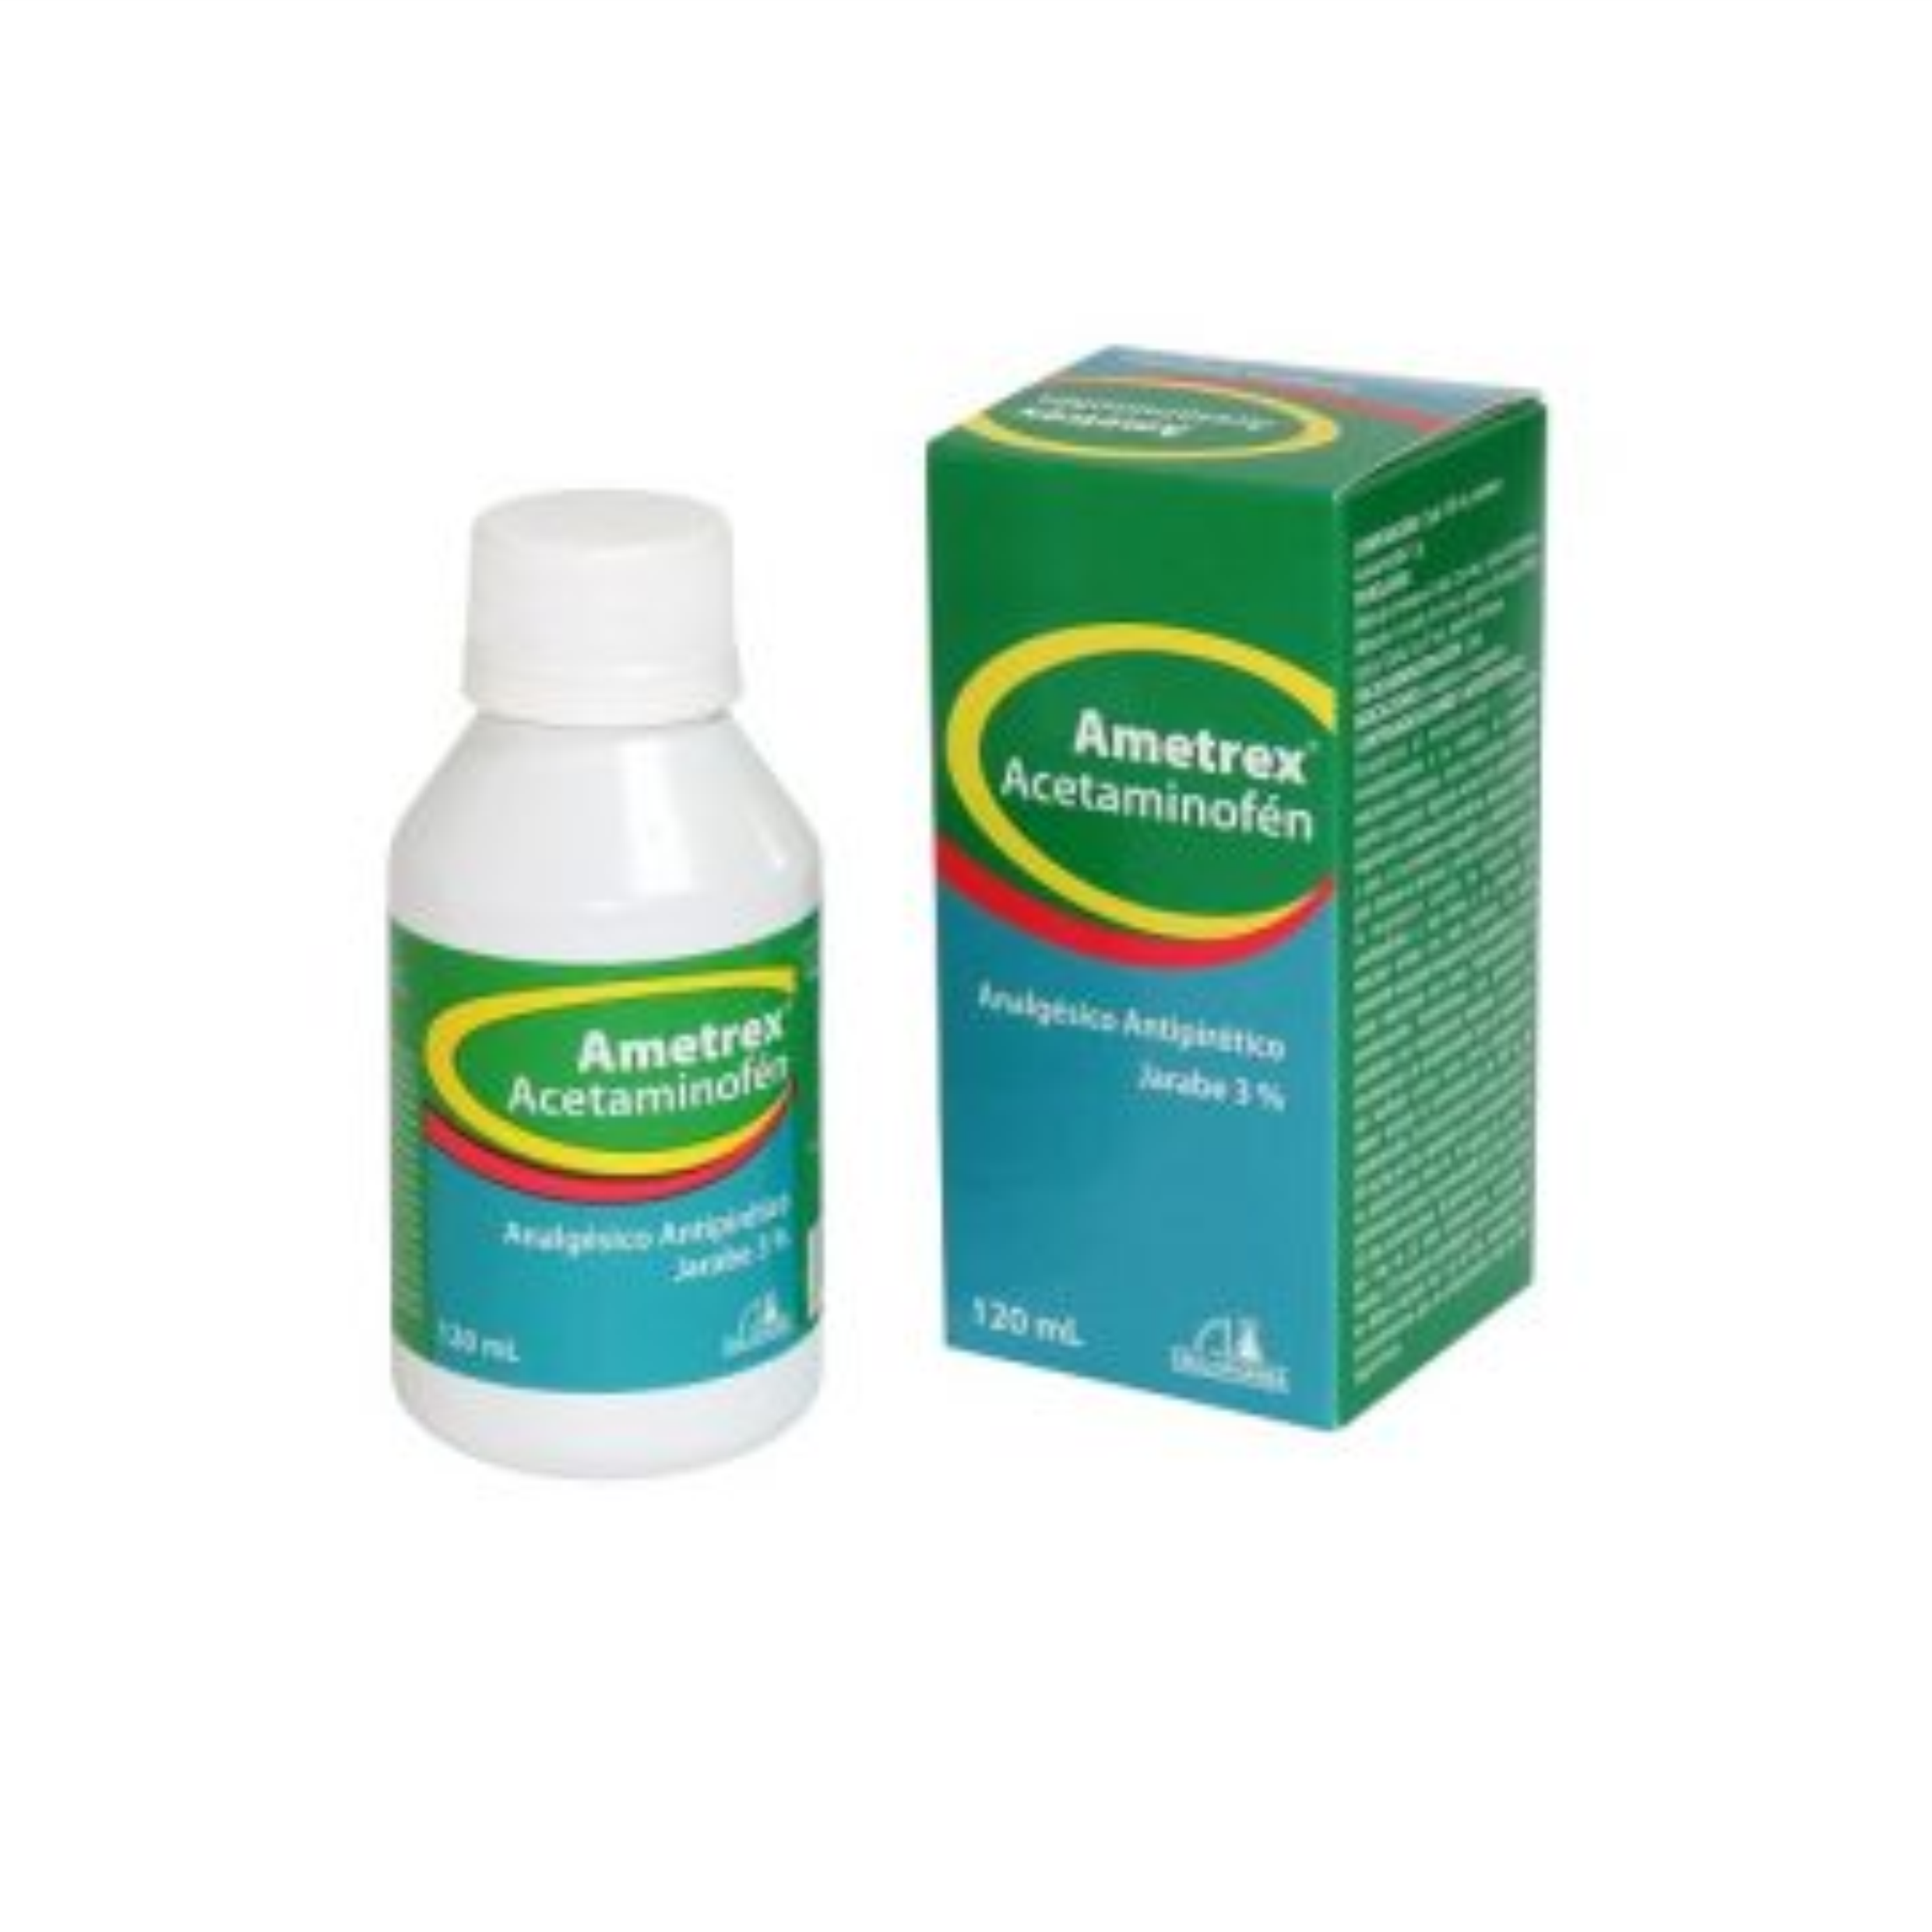 Ametrex (acetaminofén) Jarabe 150 mg x 120 mL